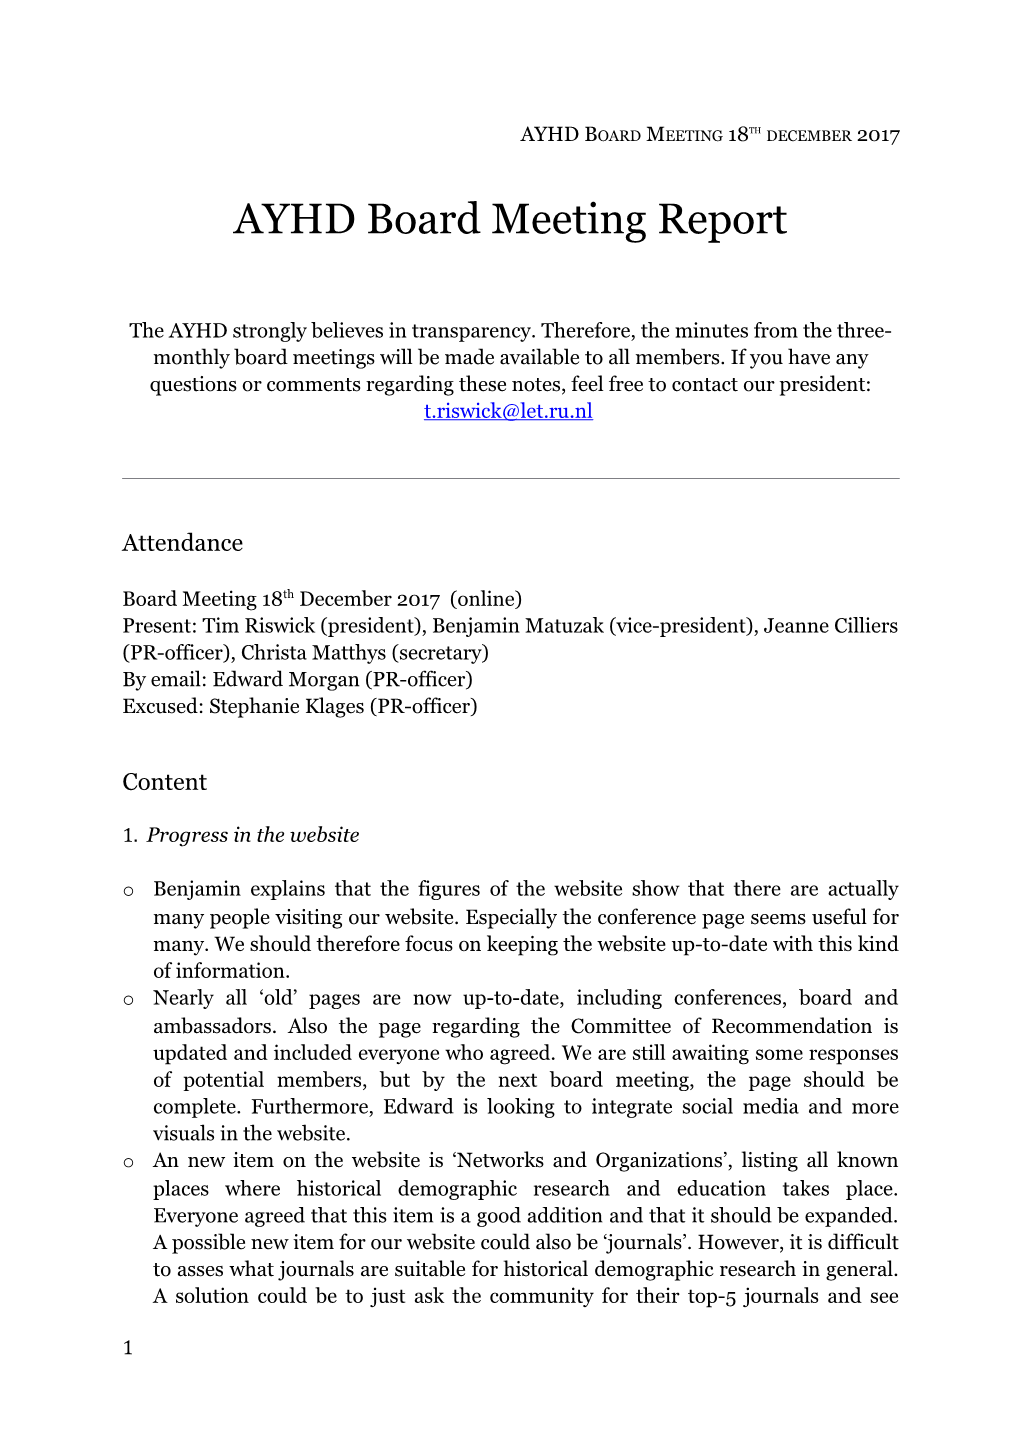 AYHD Board Meeting Report